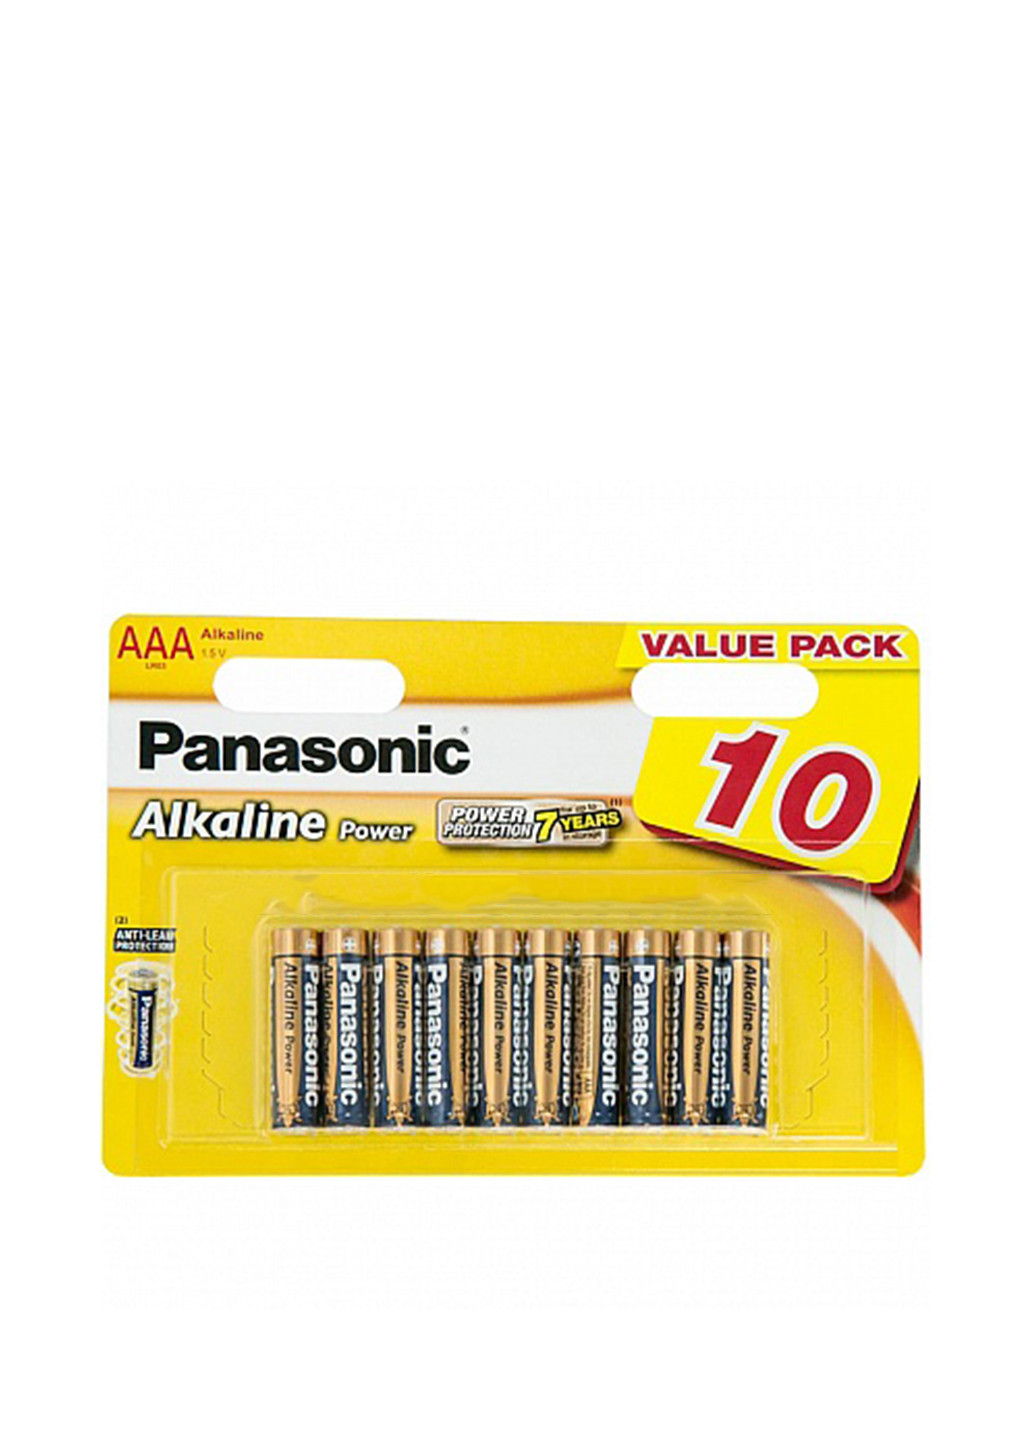 Батарейка Panasonic alkaline power aaa bli 10 (lr03reb/10bw) (138004396)